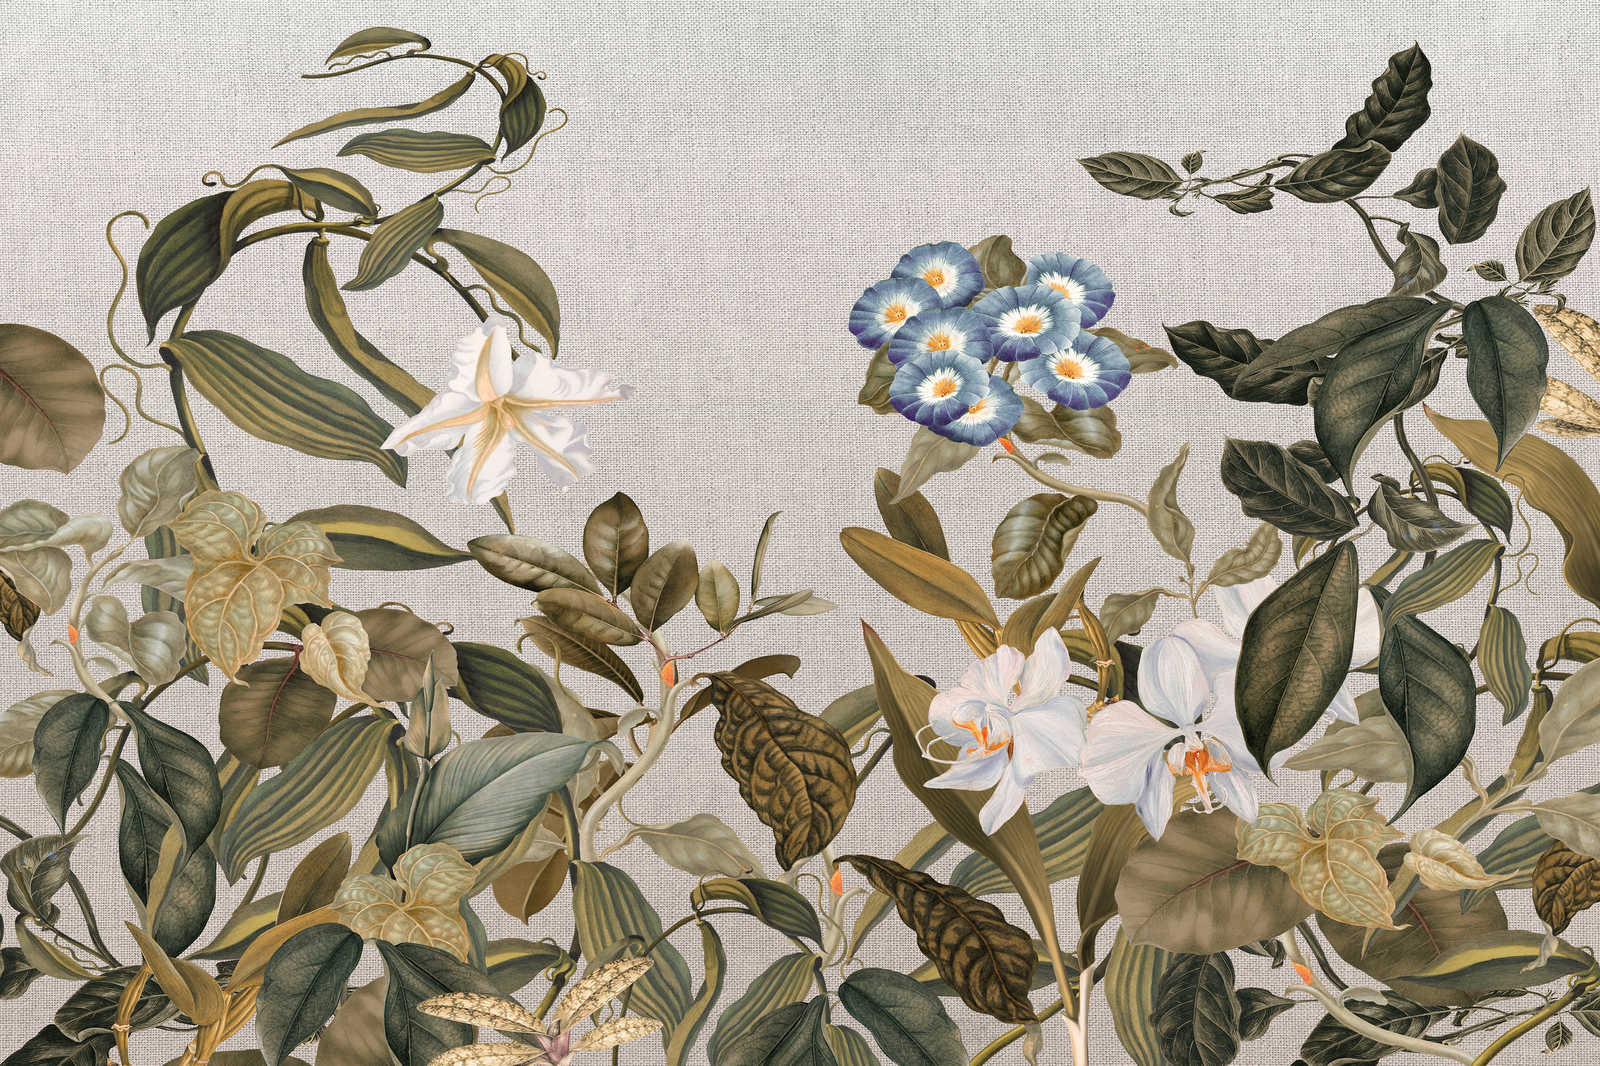             Tela dipinta in stile botanico Fiori, foglie e aspetto tessile - 1,20 m x 0,80 m
        